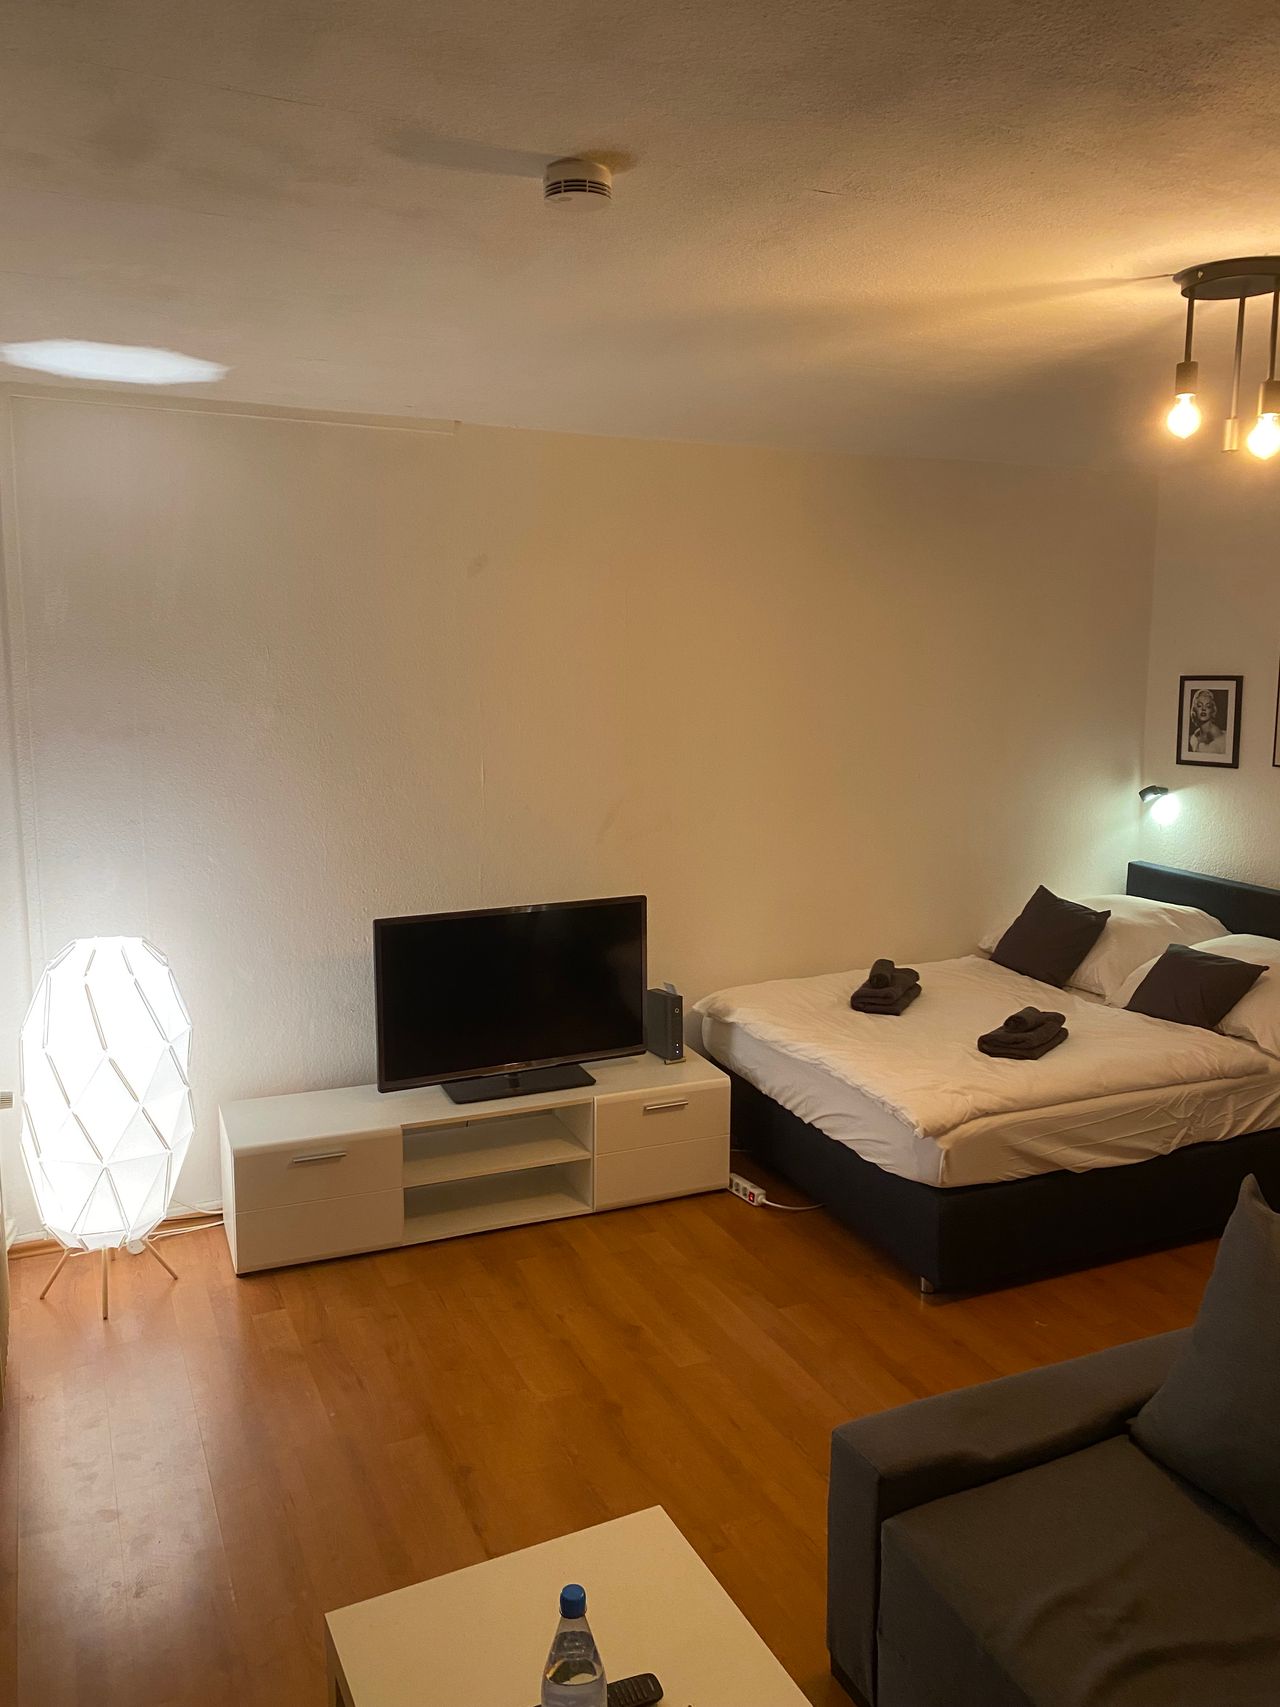 Amazing & new apartment in Dortmund